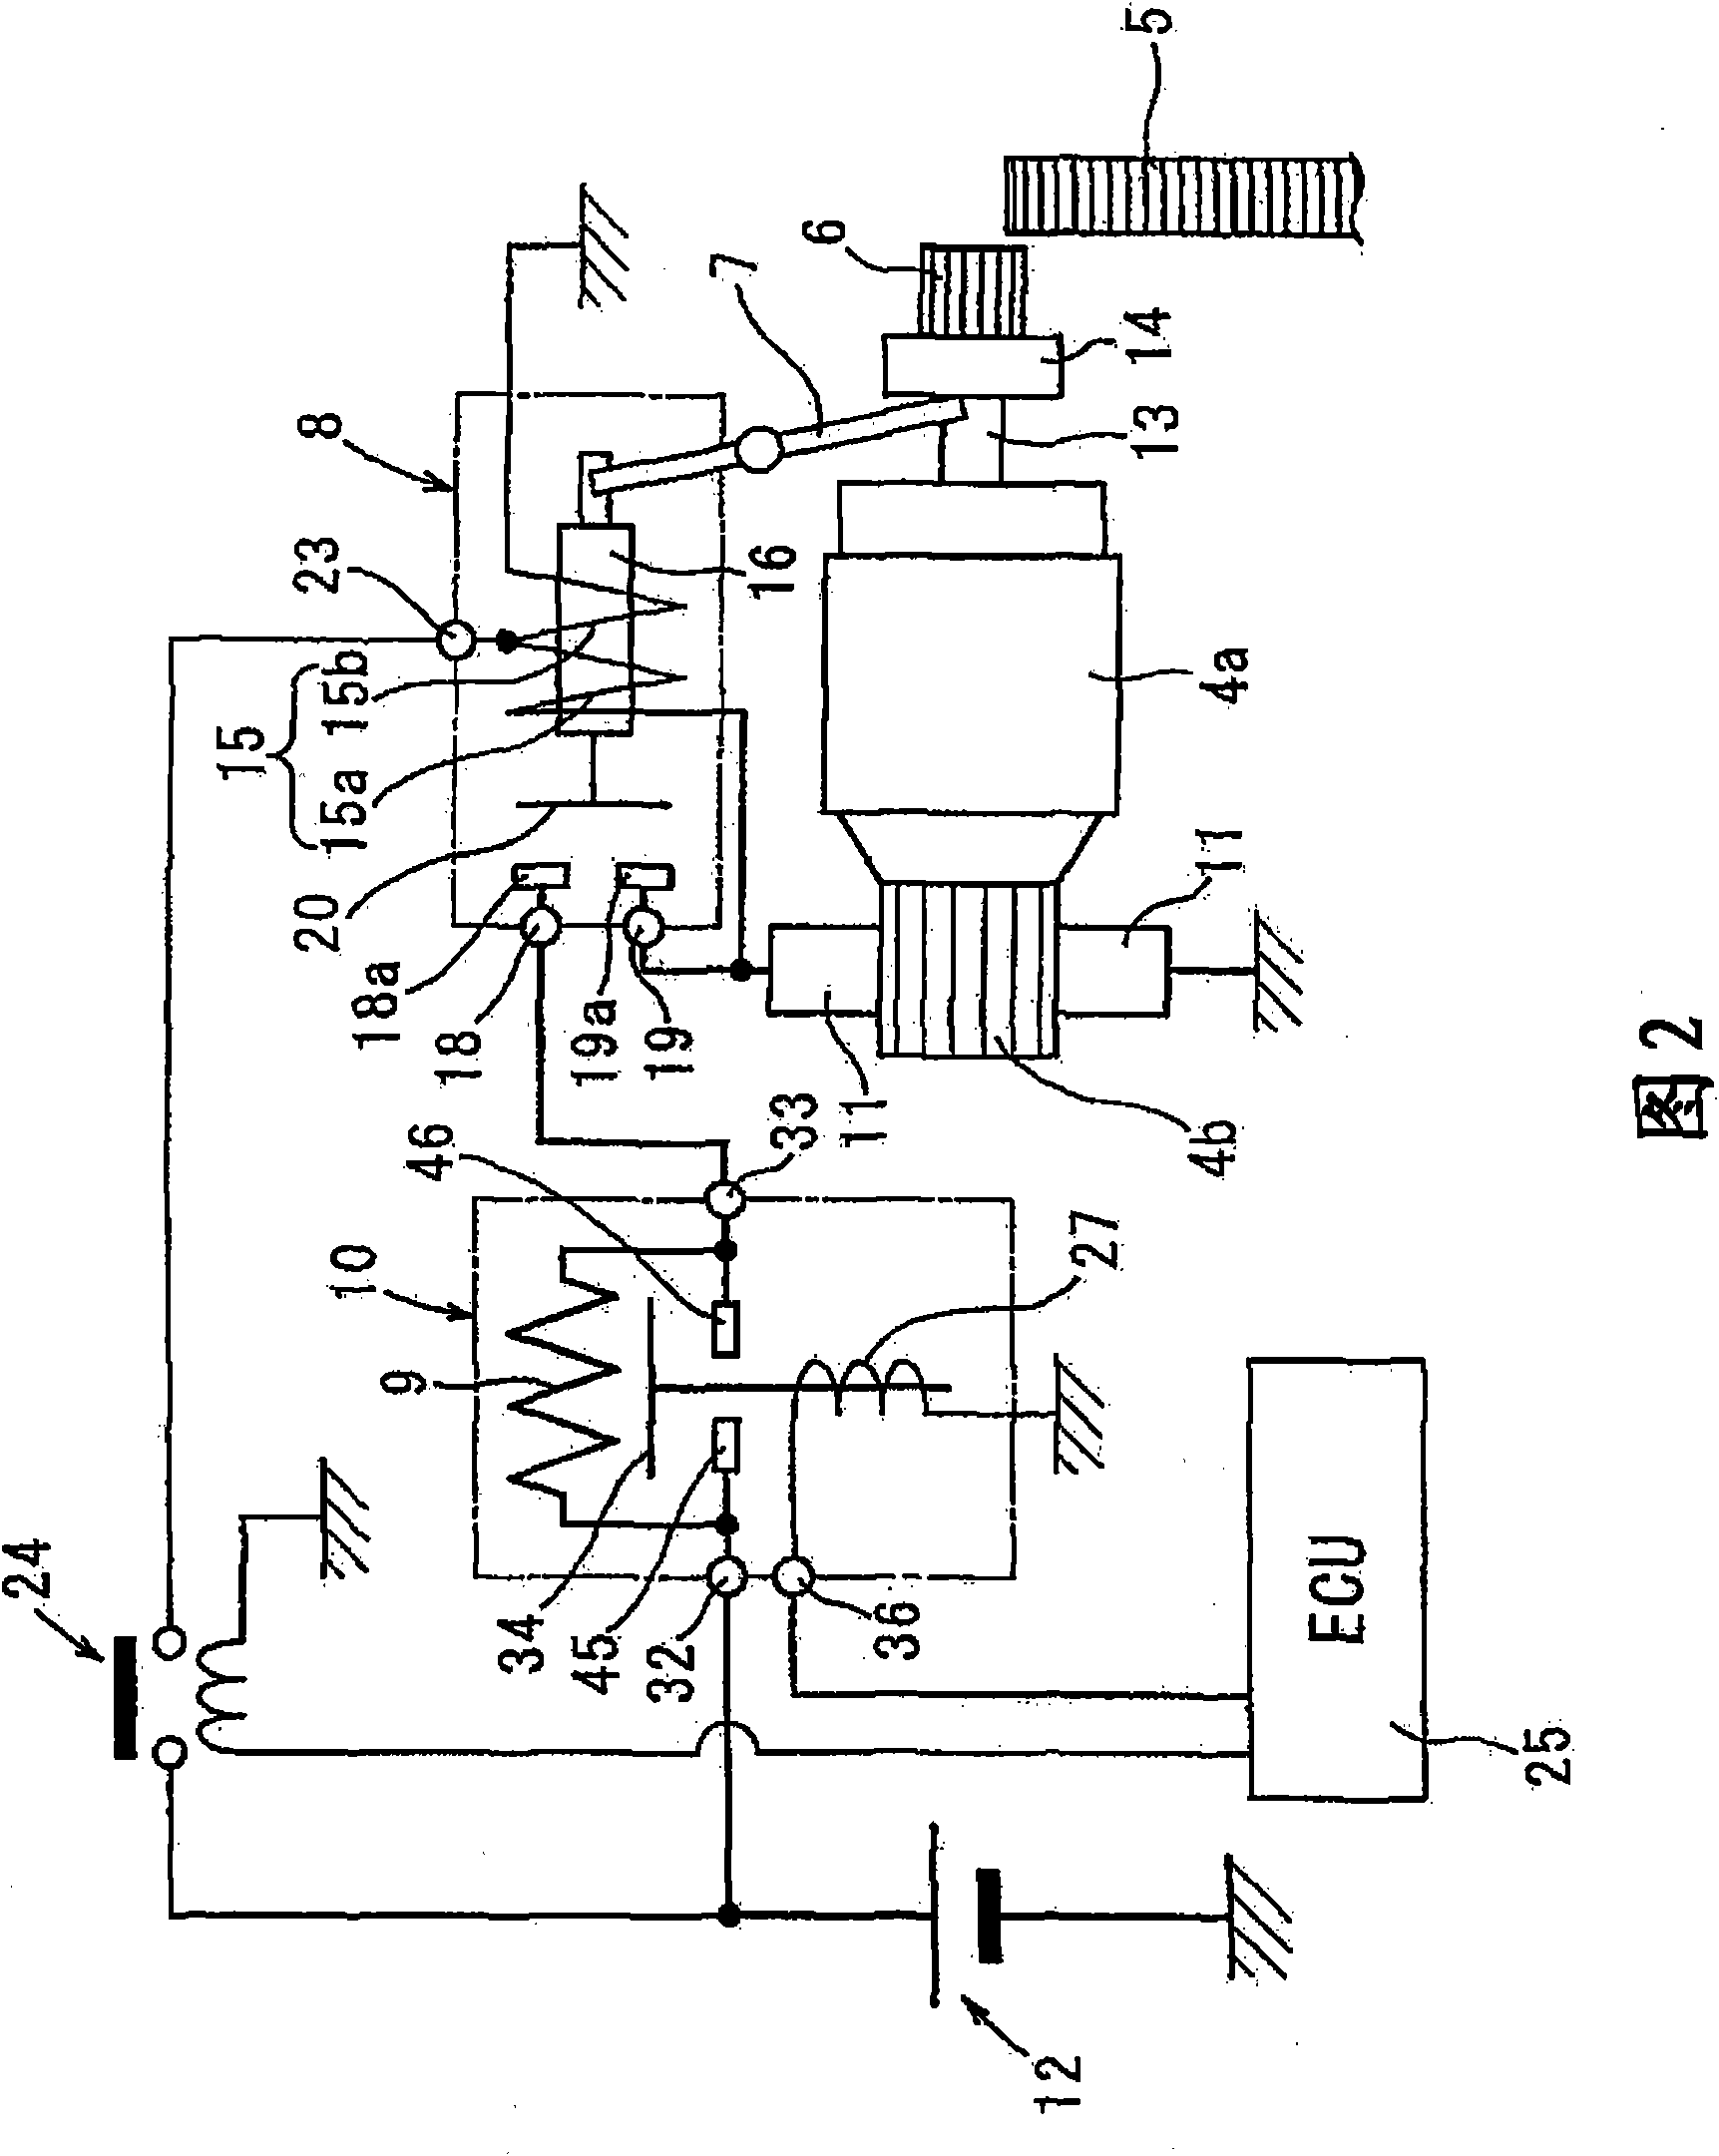 Starter solenoid switch with improved arrangement of resistor